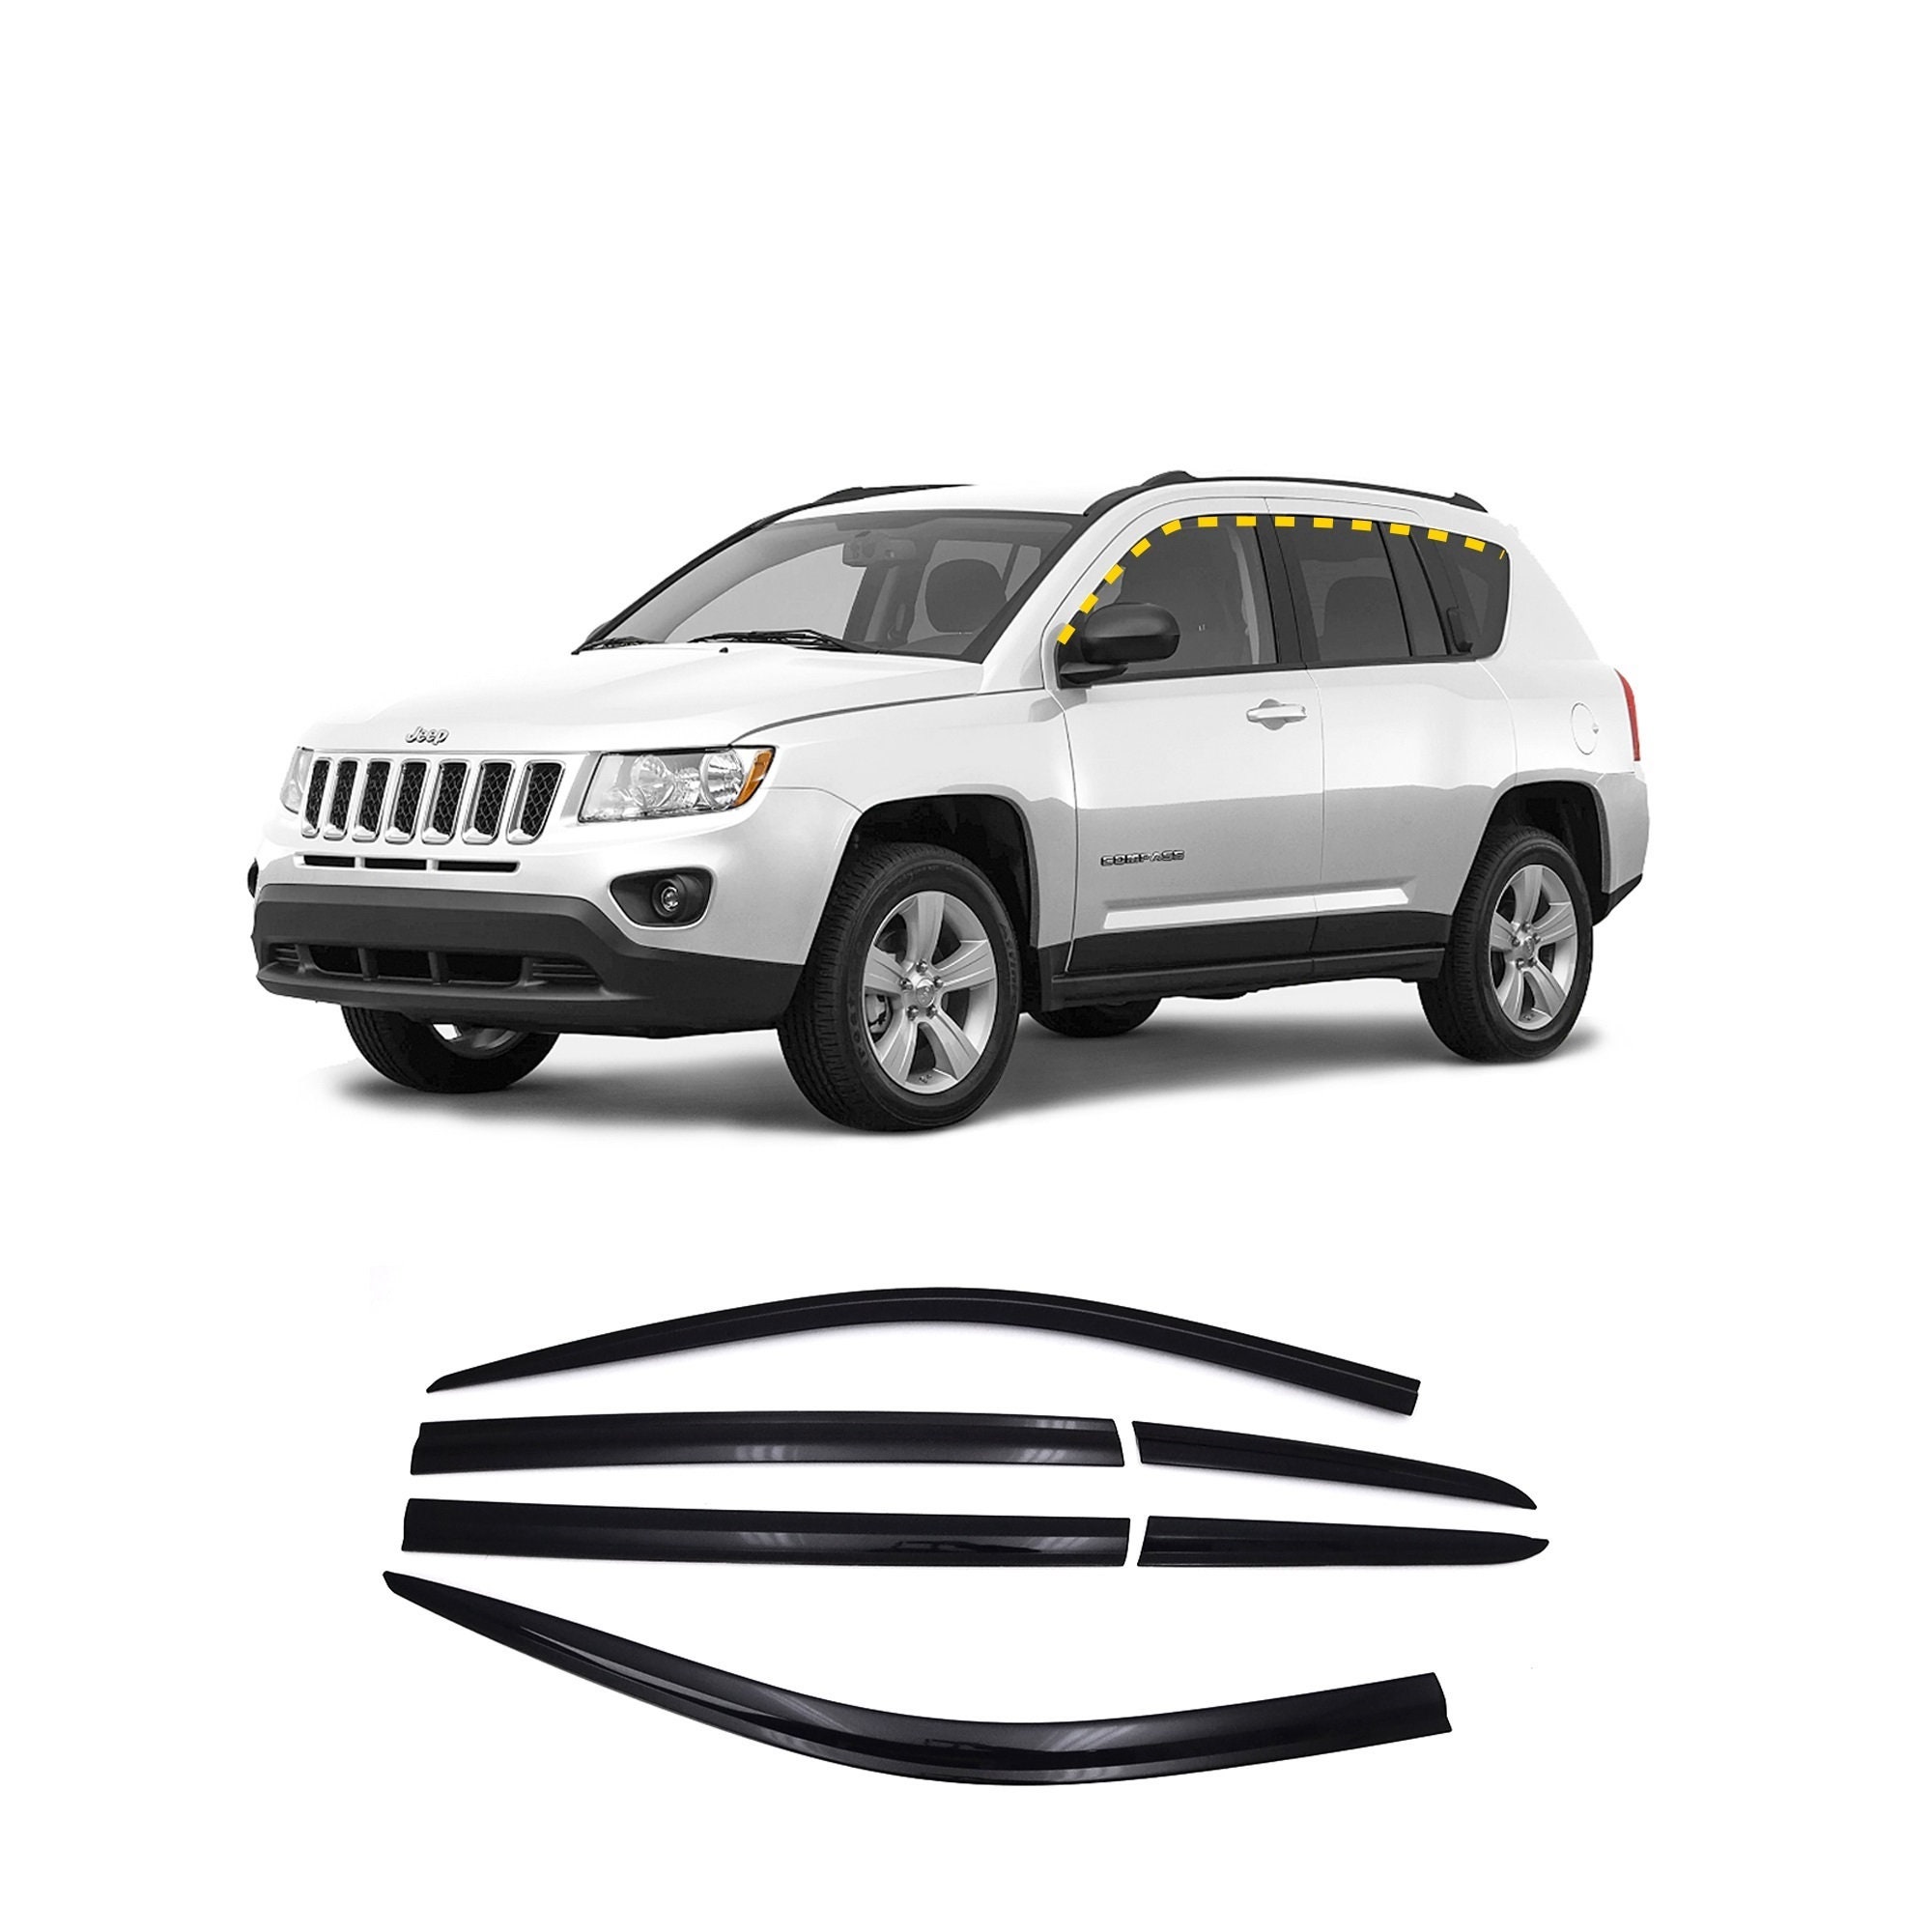 2013 Jeep Wrangler Accessories Etsy